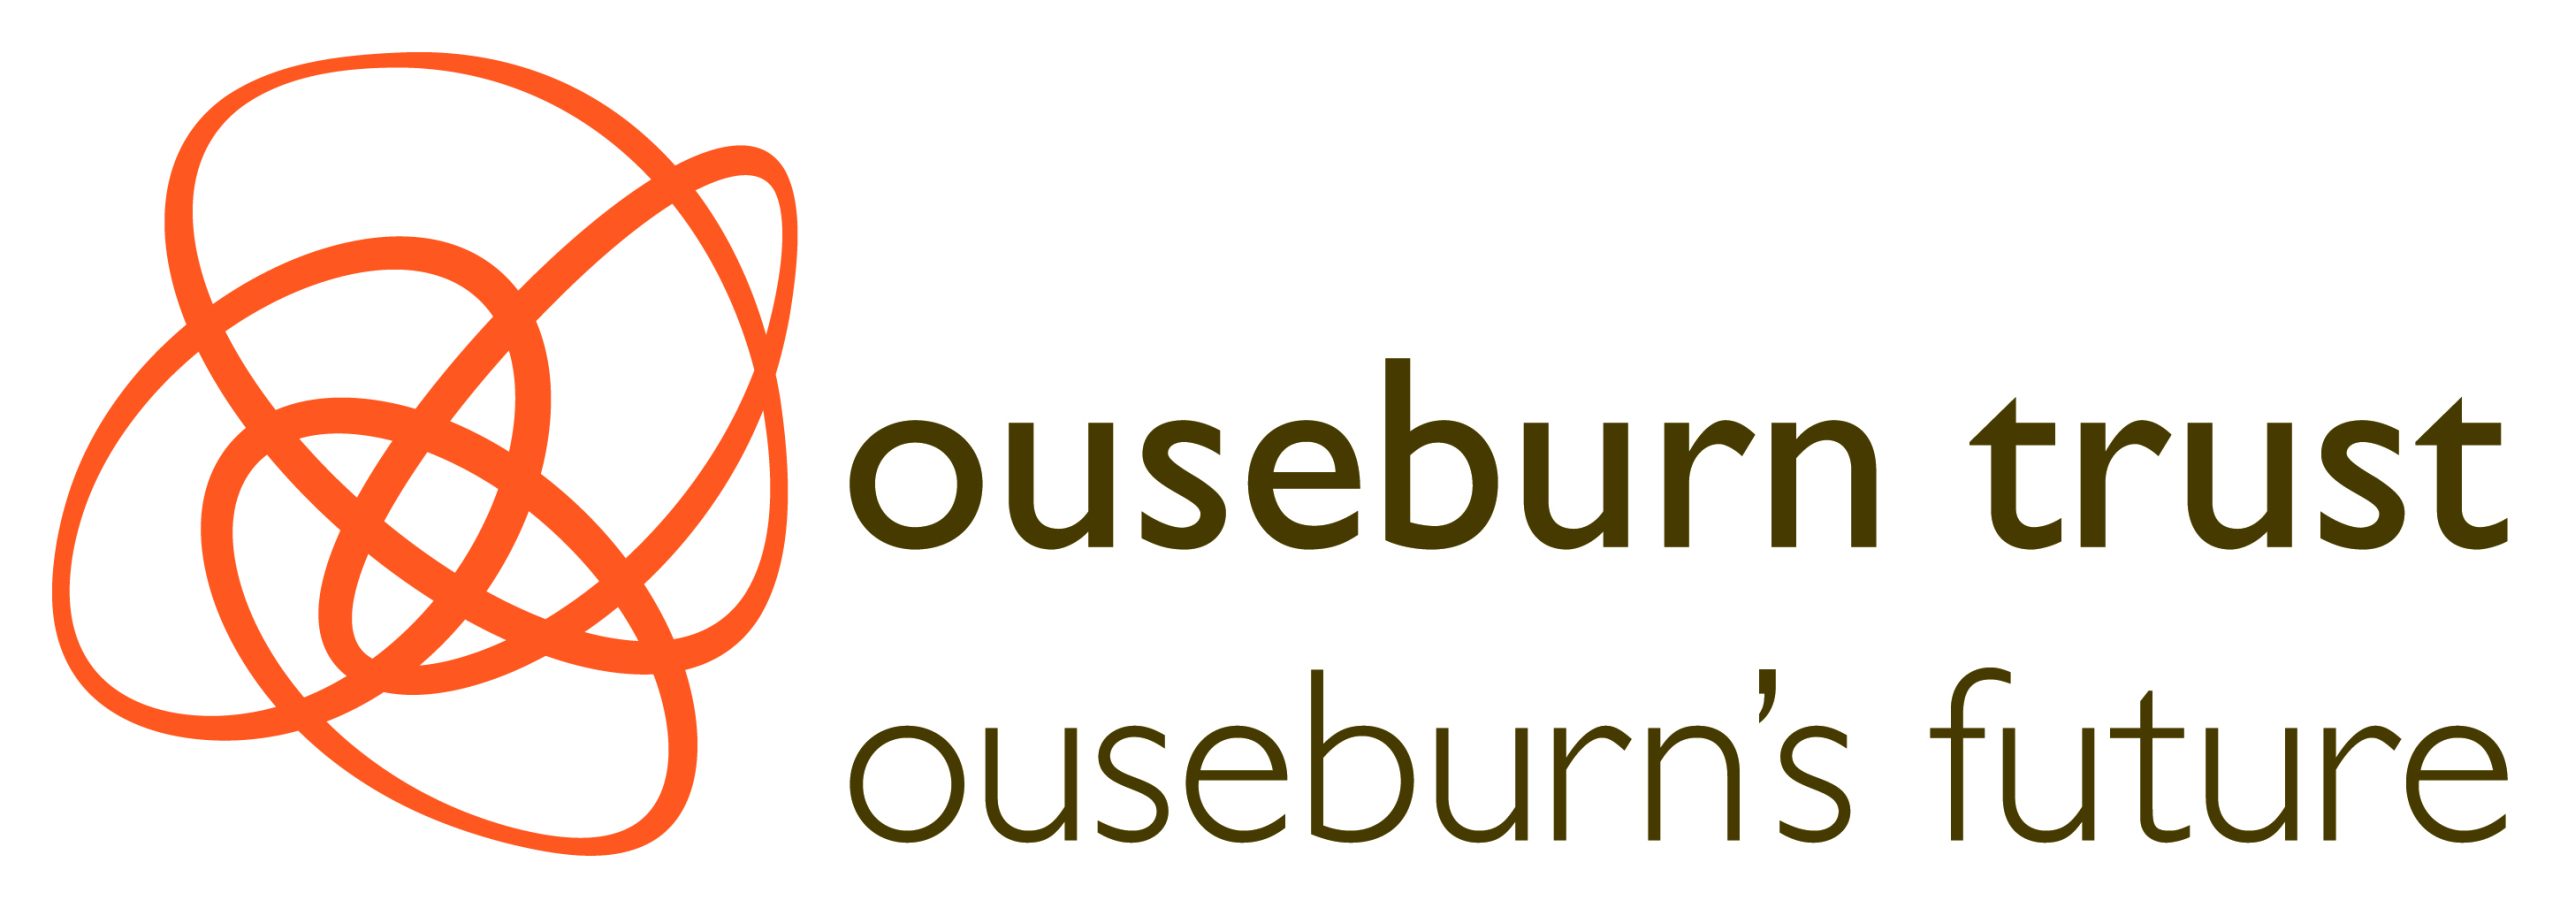 The Ouseburn Trust